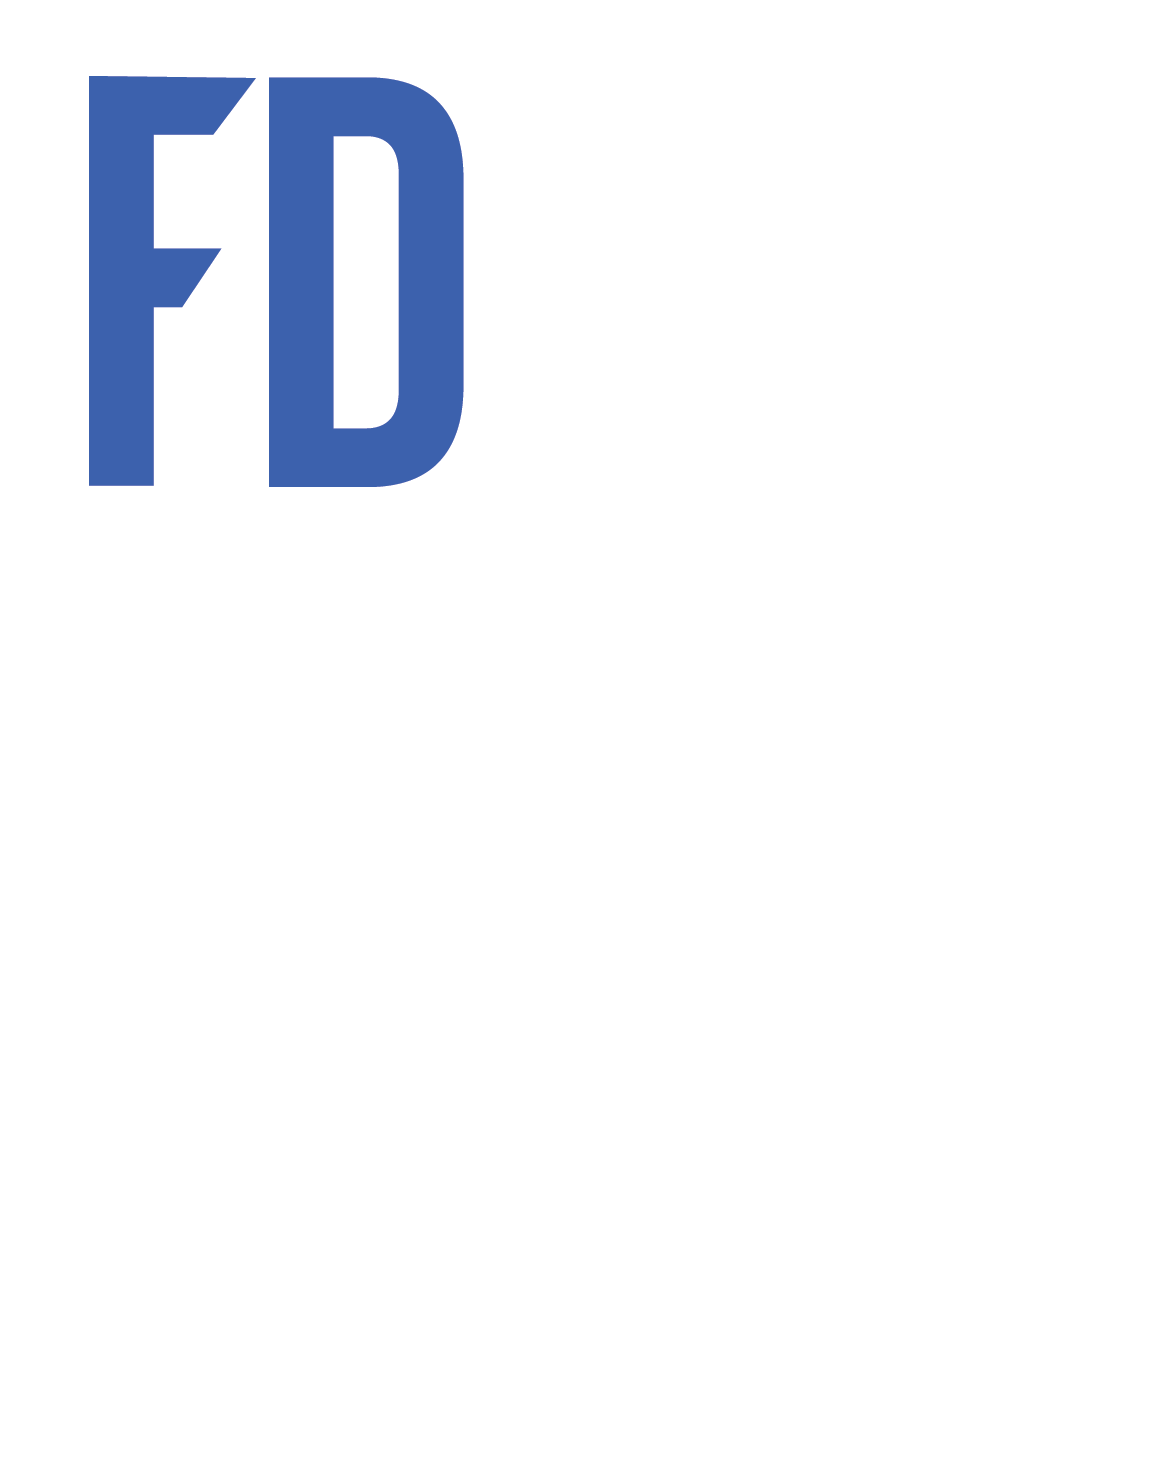 Foster Digital